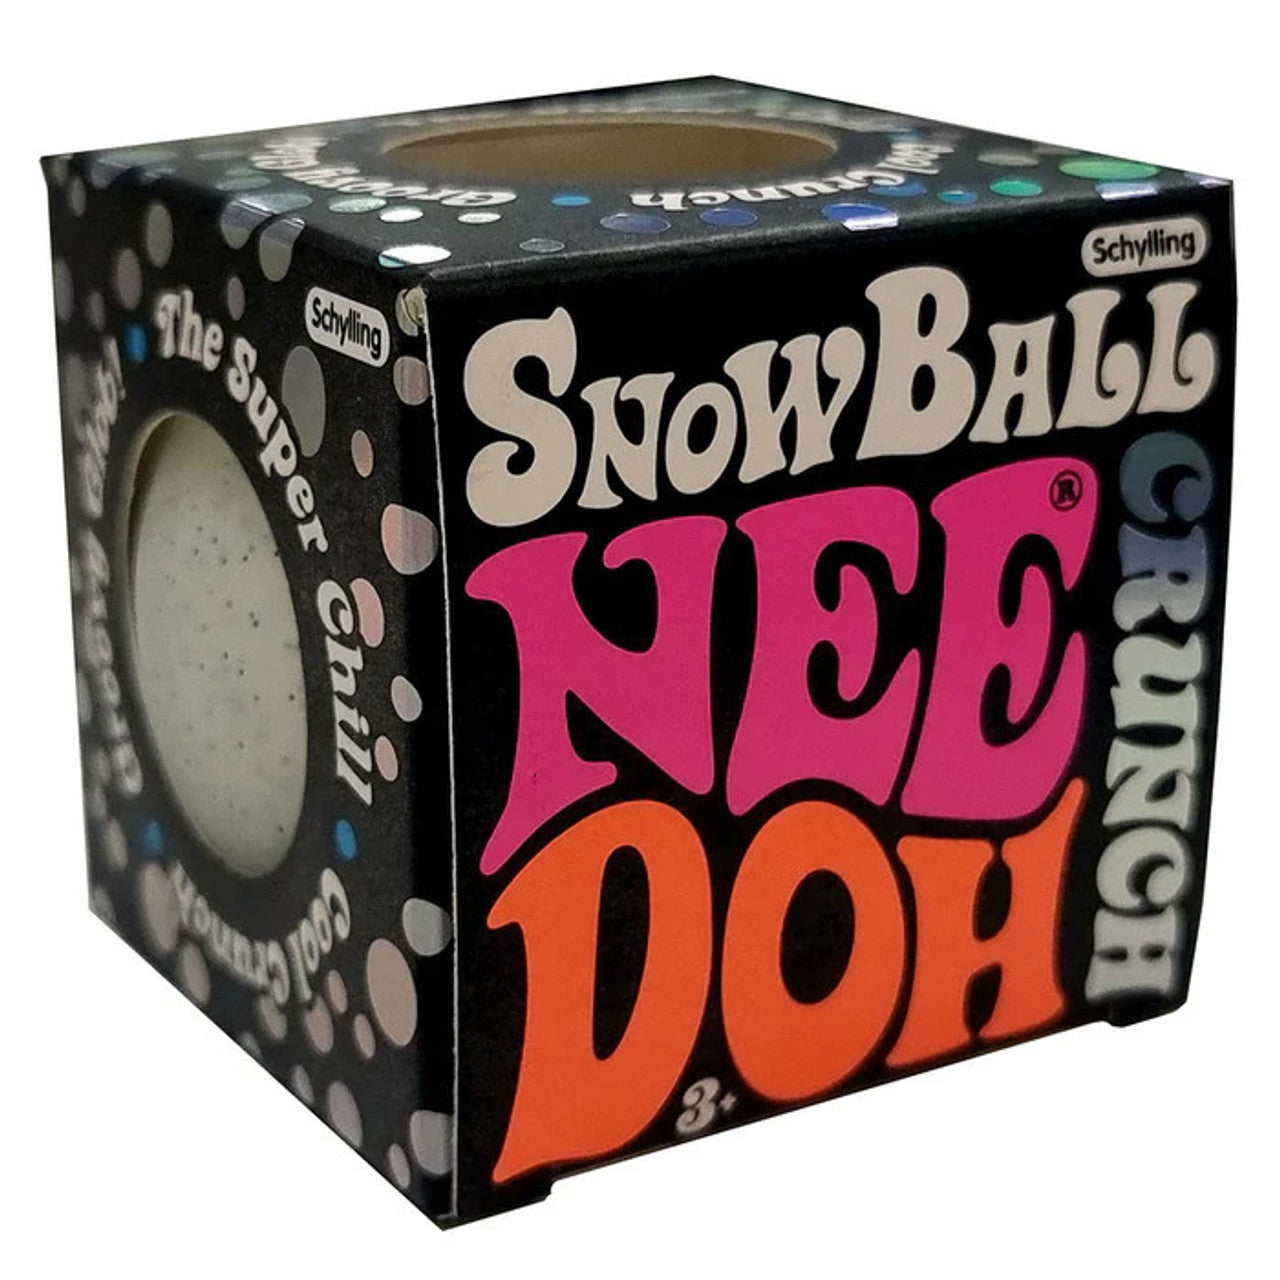 Snow Ball Crunch by Nee Doh